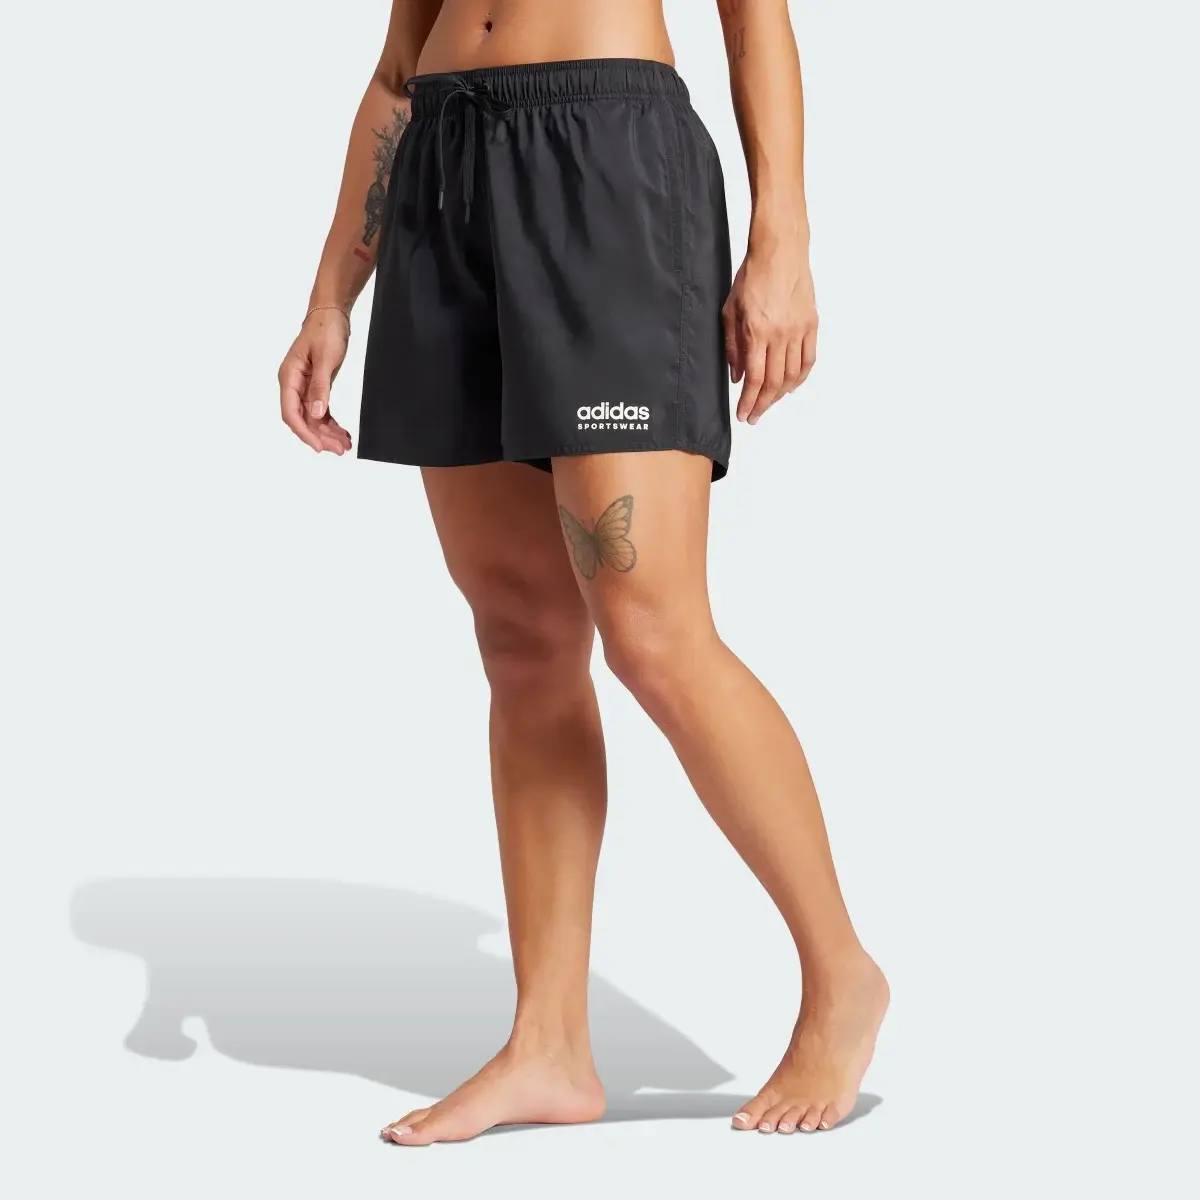 Adidas Branded Beach Shorts. 1